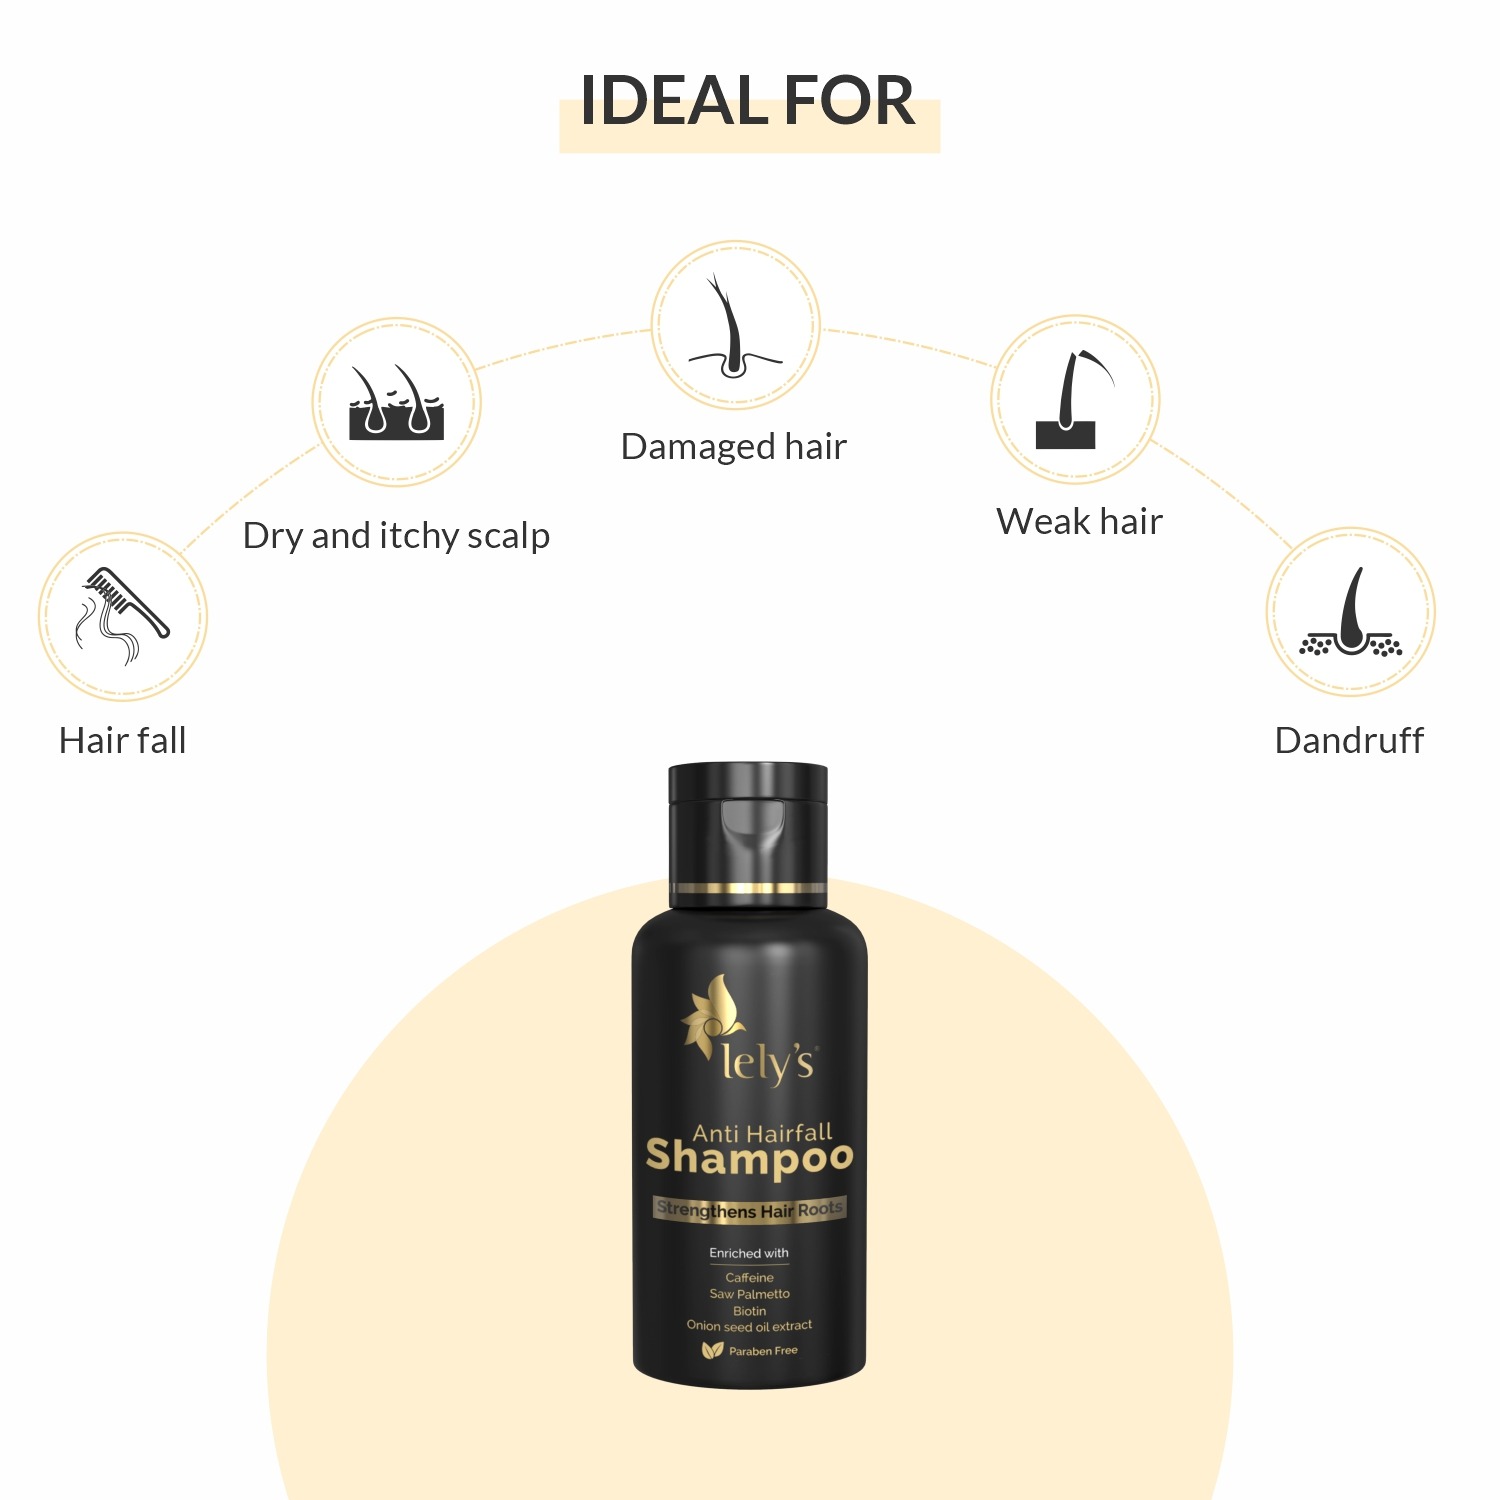 Anti Hairfall Shampoo Travel Pack Ideal For